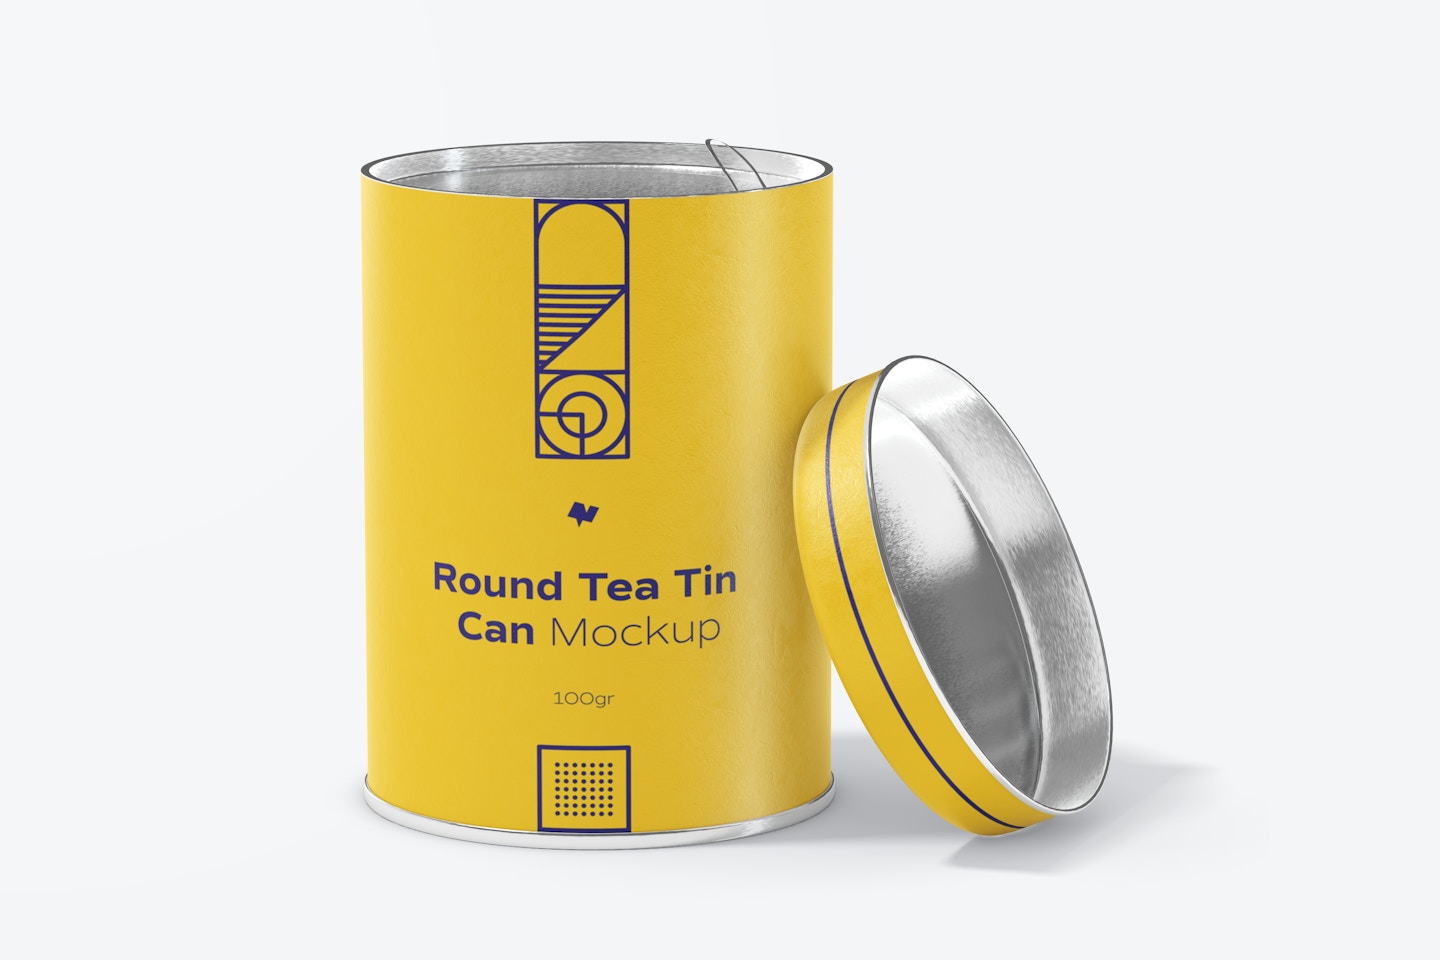 Round Tea Tin Can Mockup, Opened